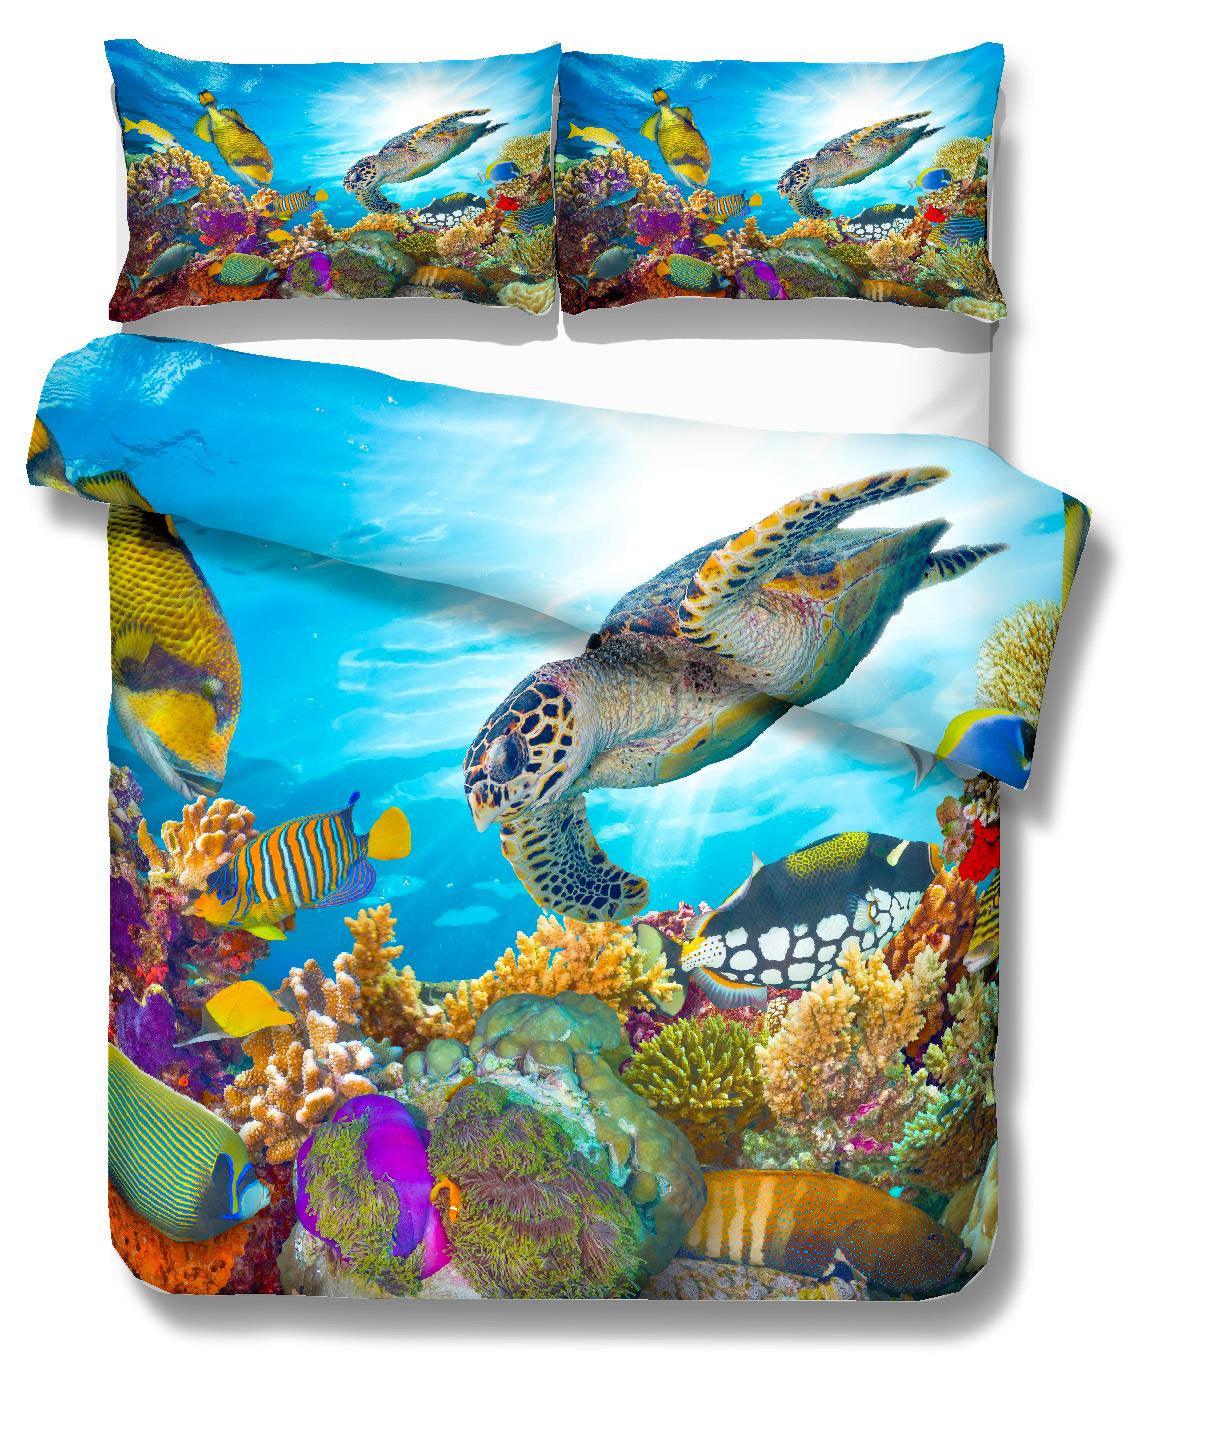 3D Sea world, Sea turtle Bedding Set Quilt Cover Quilt Duvet Cover ,Pillowcases Personalized  Bedding,Queen, King ,Full, Double 3 Pcs- Jess Art Decoration